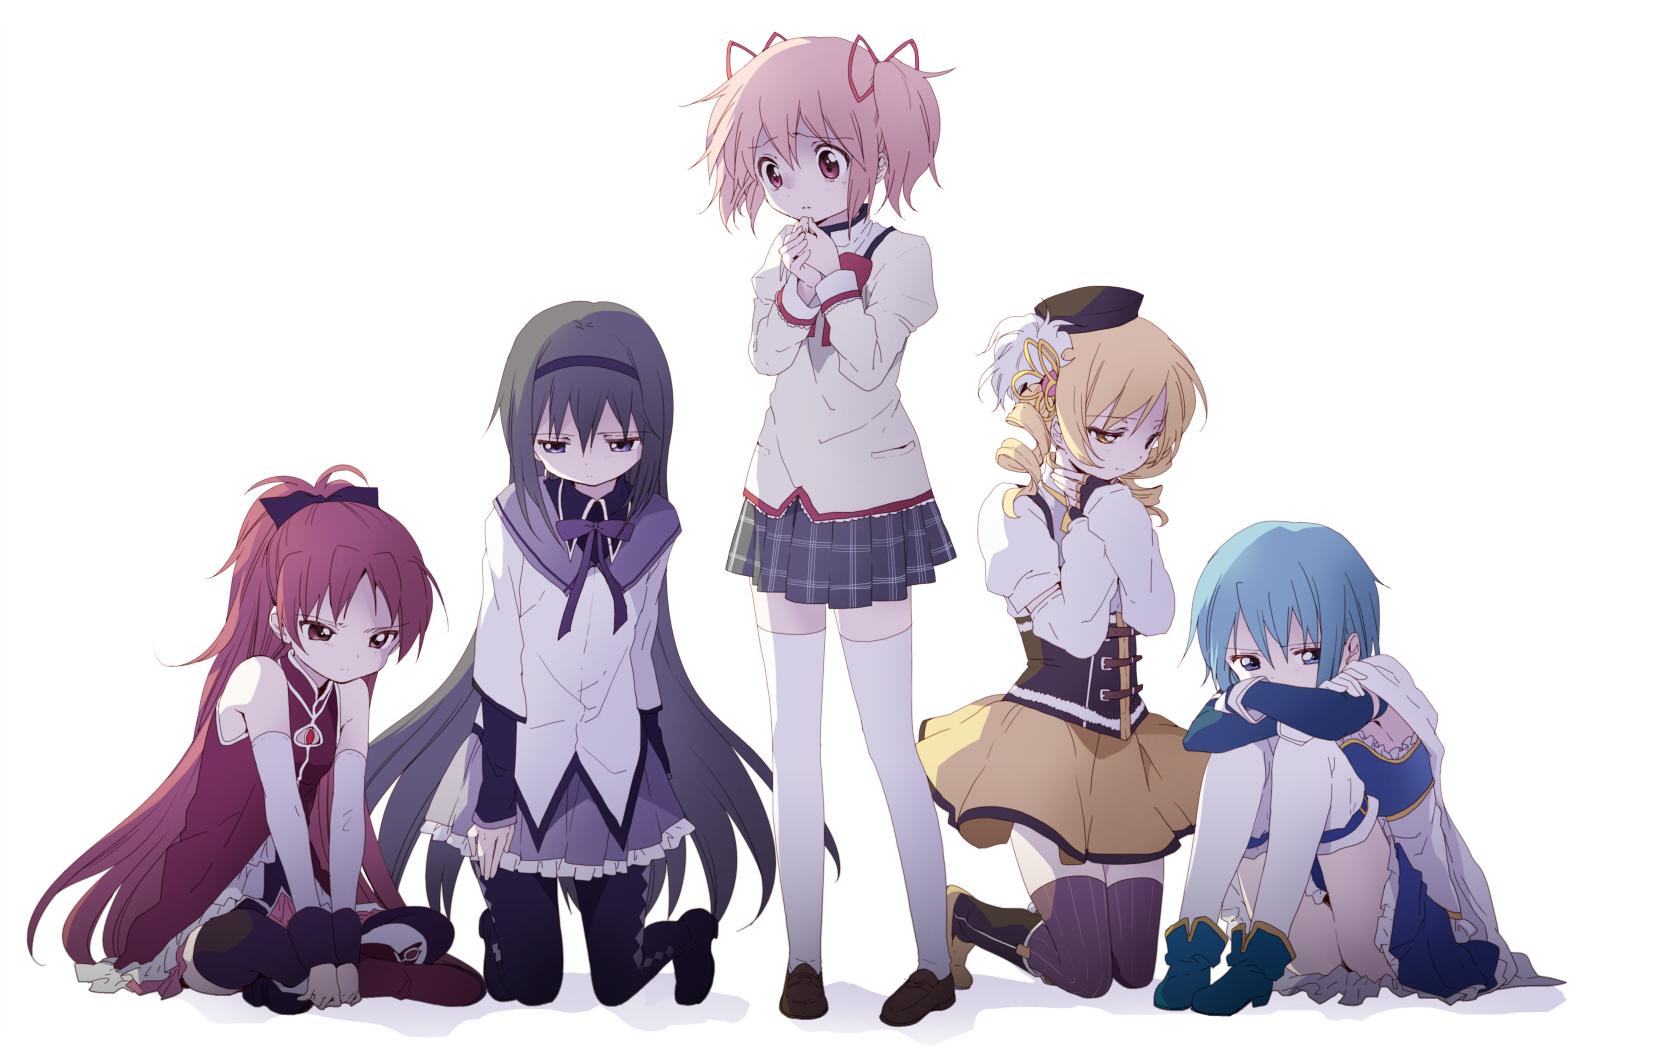 Baixe gratuitamente a imagem Anime, Kyōko Sakura, Mahô Shôjo Madoka Magika: Puella Magi Madoka Magica, Homura Akemi, Madoka Kaname, Mami Tomoe, Sayaka Miki na área de trabalho do seu PC